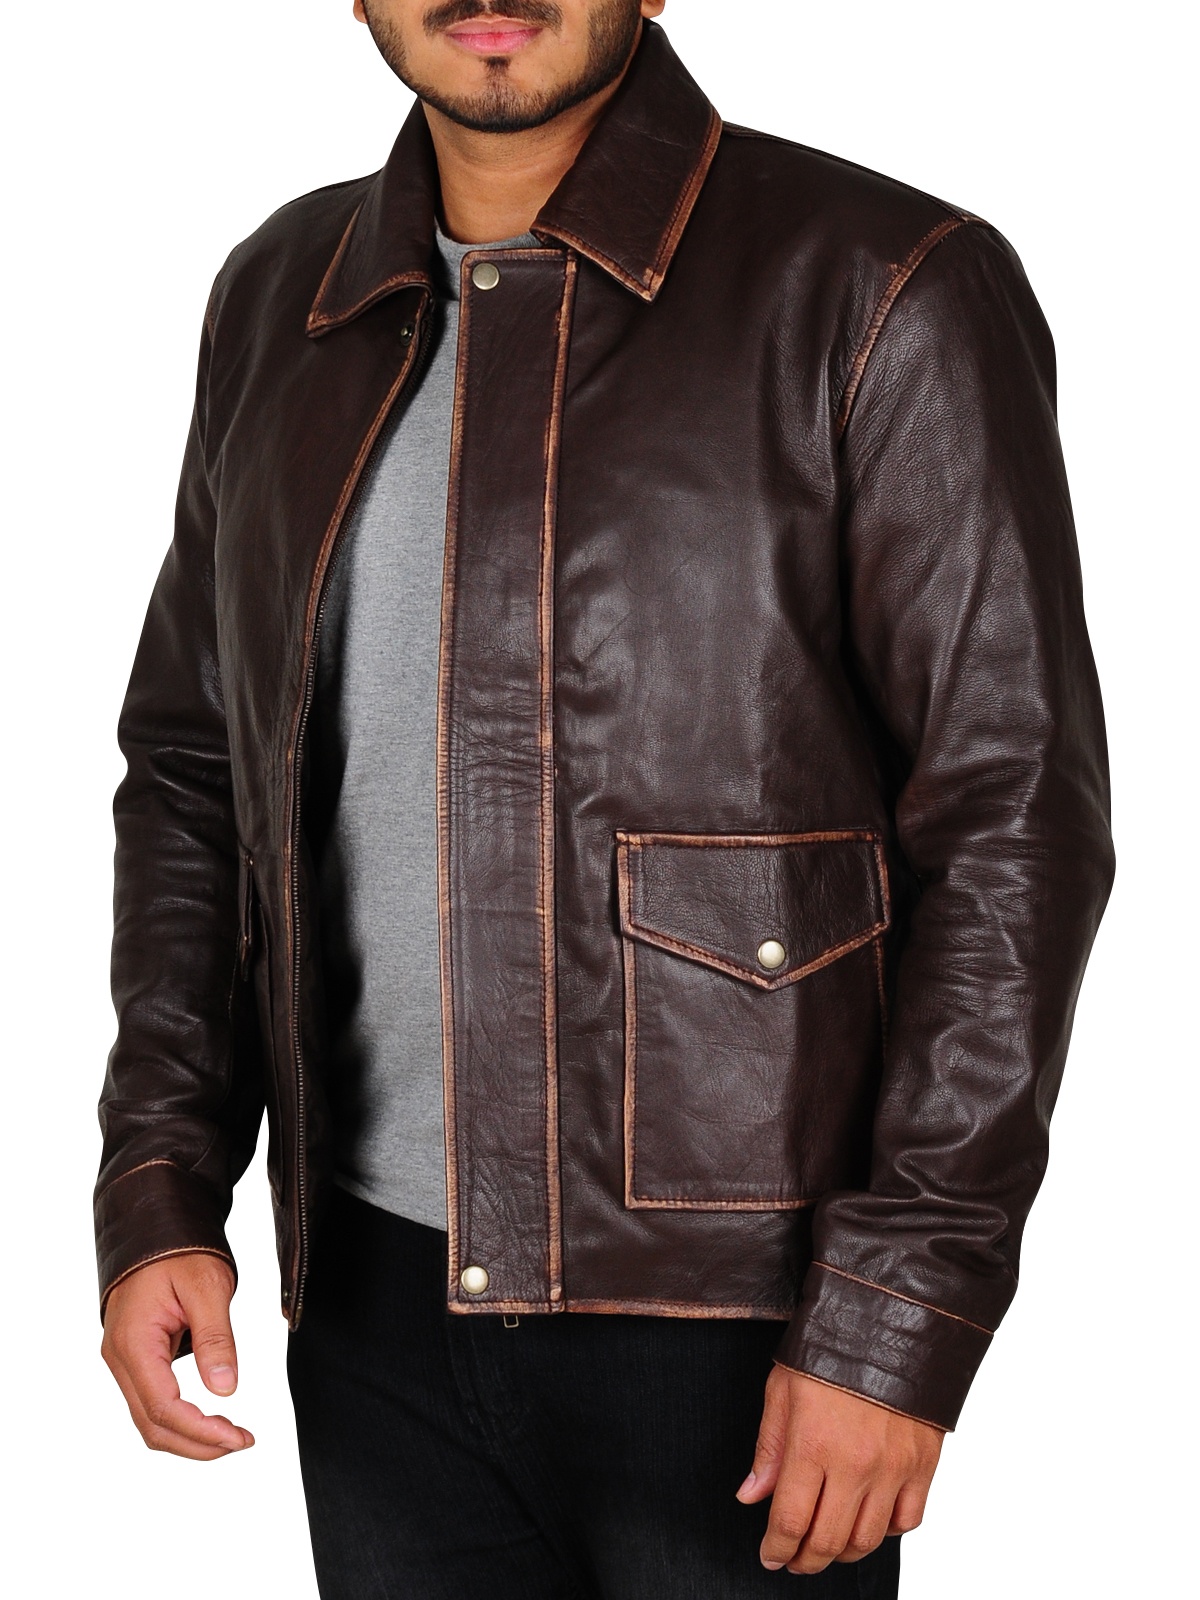 Indiana Jones Harrison Ford Leather Jacket - A2 Jackets